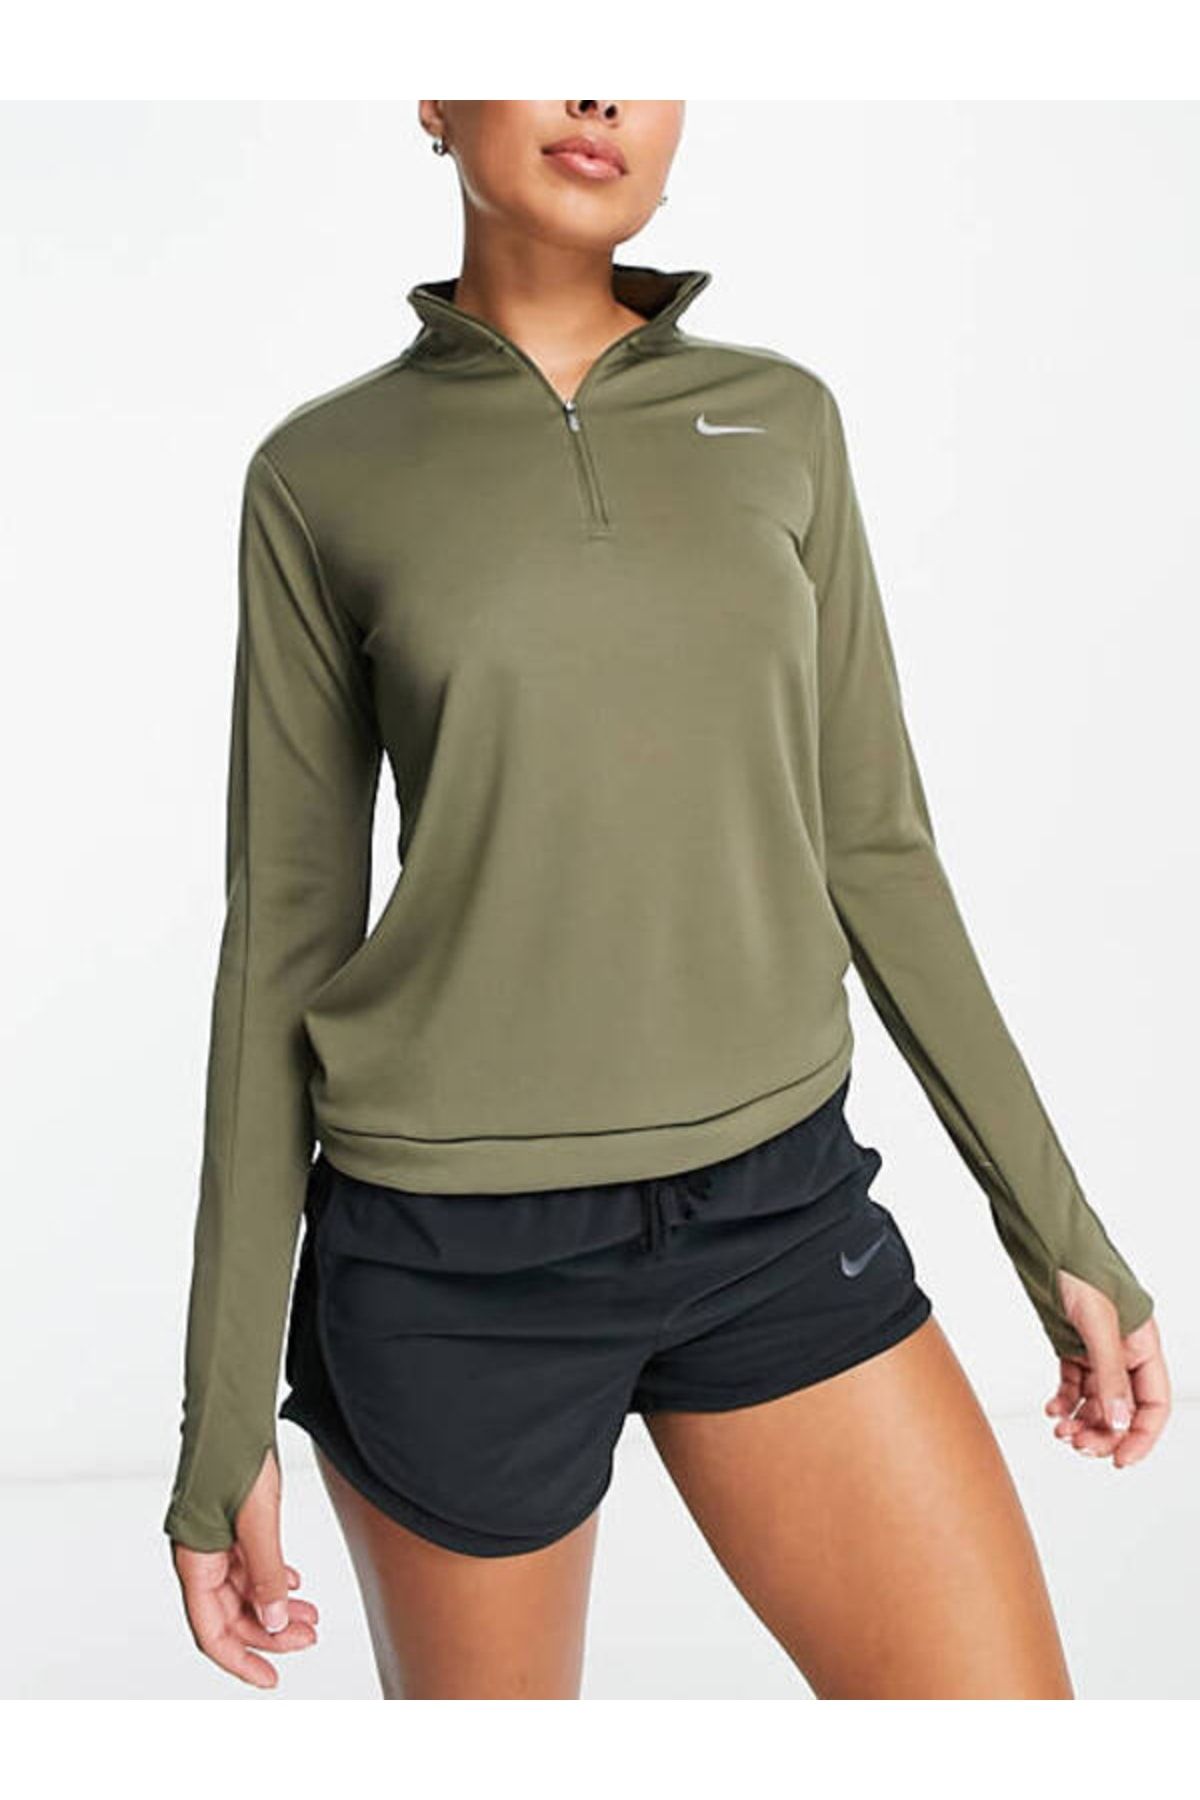 Nike Dri-fıt Pacer Women's 1/4-zip Sweatshirt